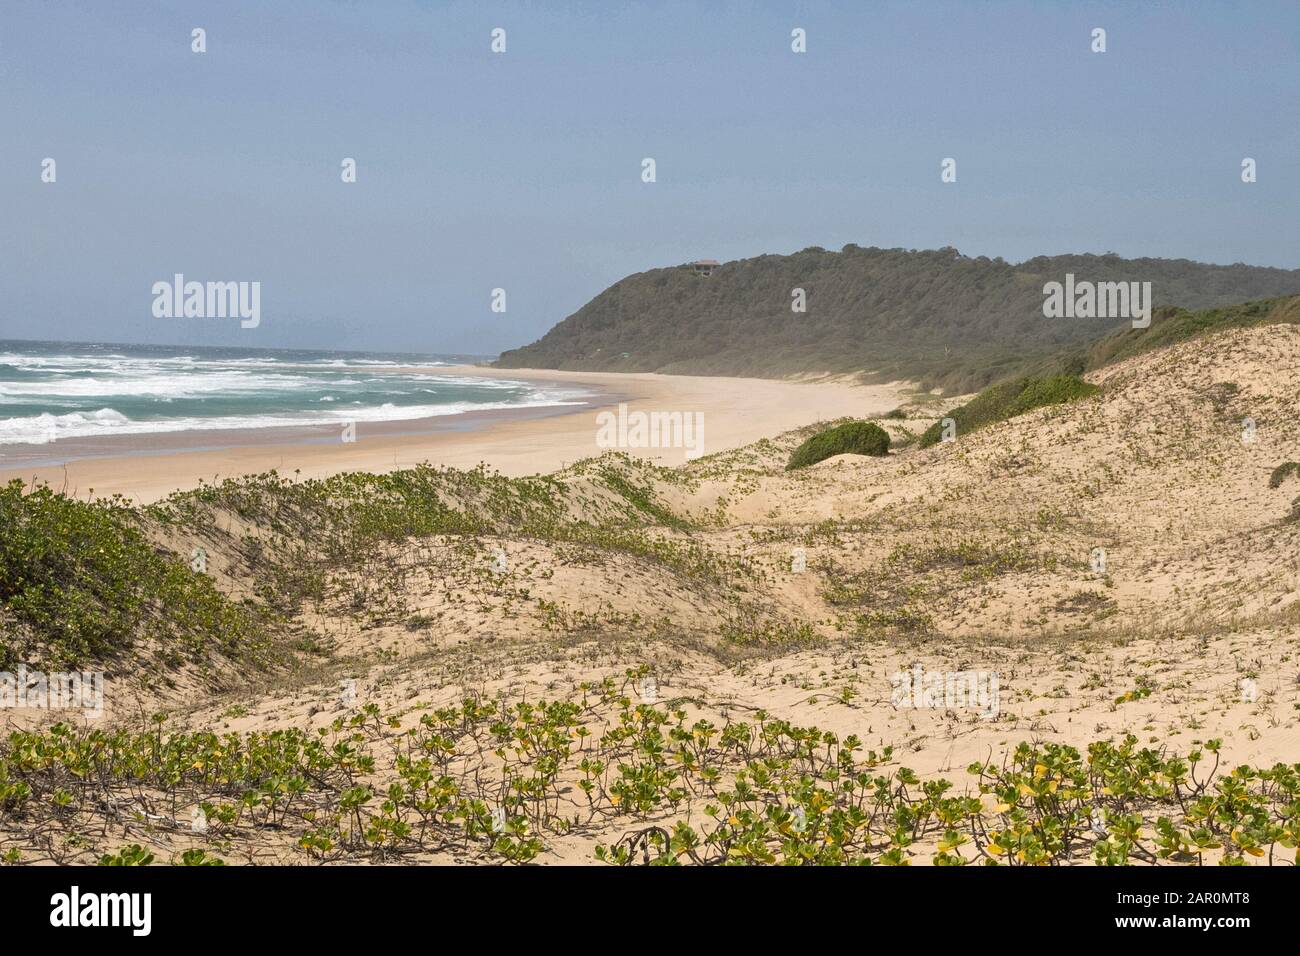 Beach vegetation, (Scaevola plumieri) at beach front, Ponta Malongane beach, Mozambique. Stock Photo